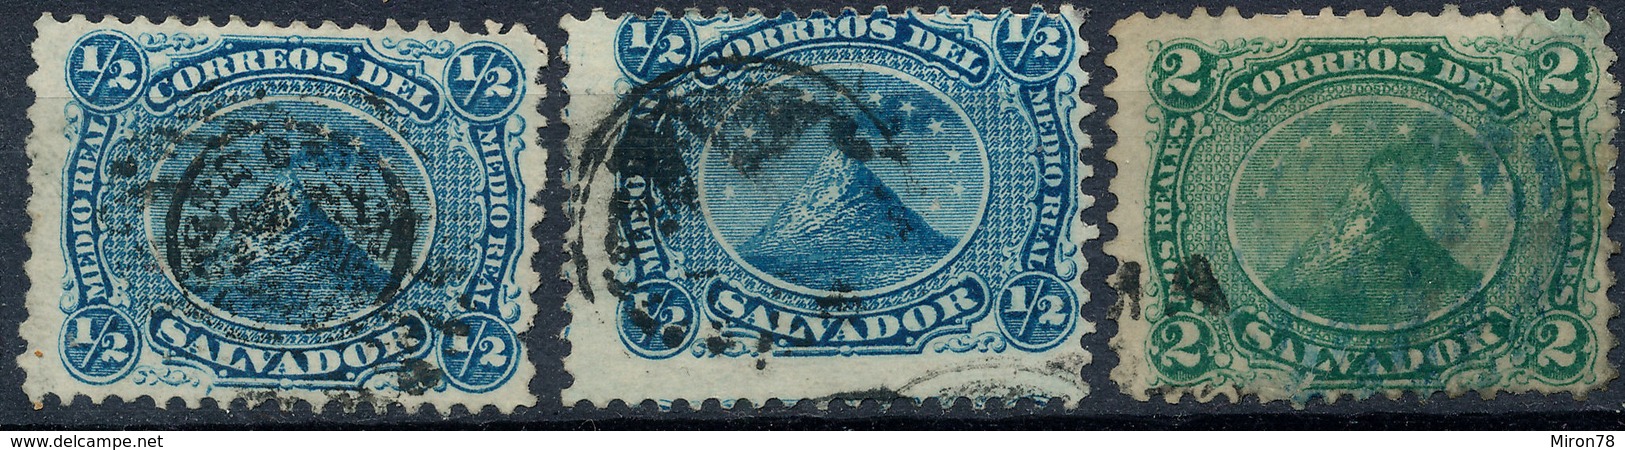 Stamps Salvador Used - Salvador